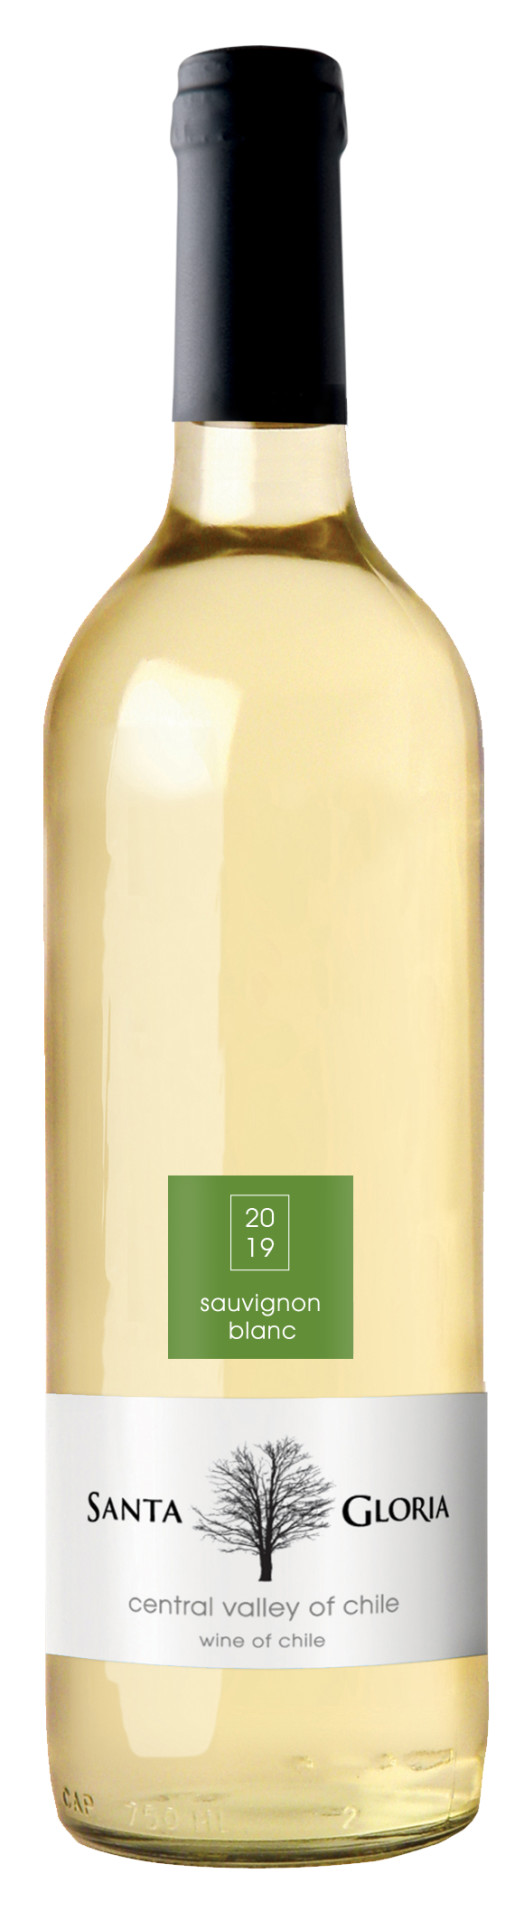 Santa Gloria Sauvignon Blanc chilei minőségi fehérbor 0.75l (Varietal)